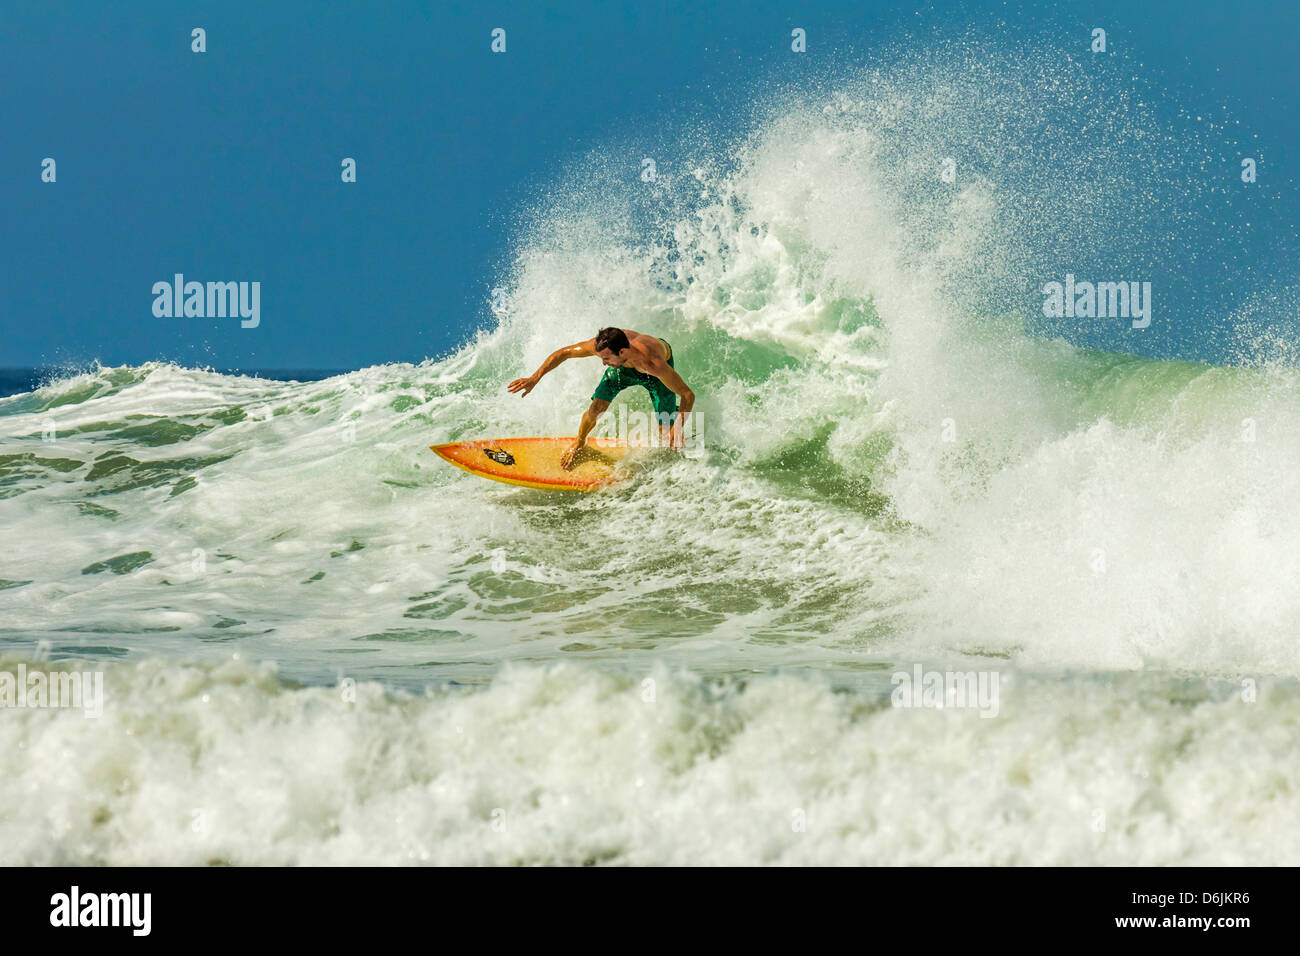 Surfer on shortboard riding wave at popular Playa Guiones surf beach, Nosara, Nicoya Peninsula, Guanacaste Province, Costa Rica Stock Photo